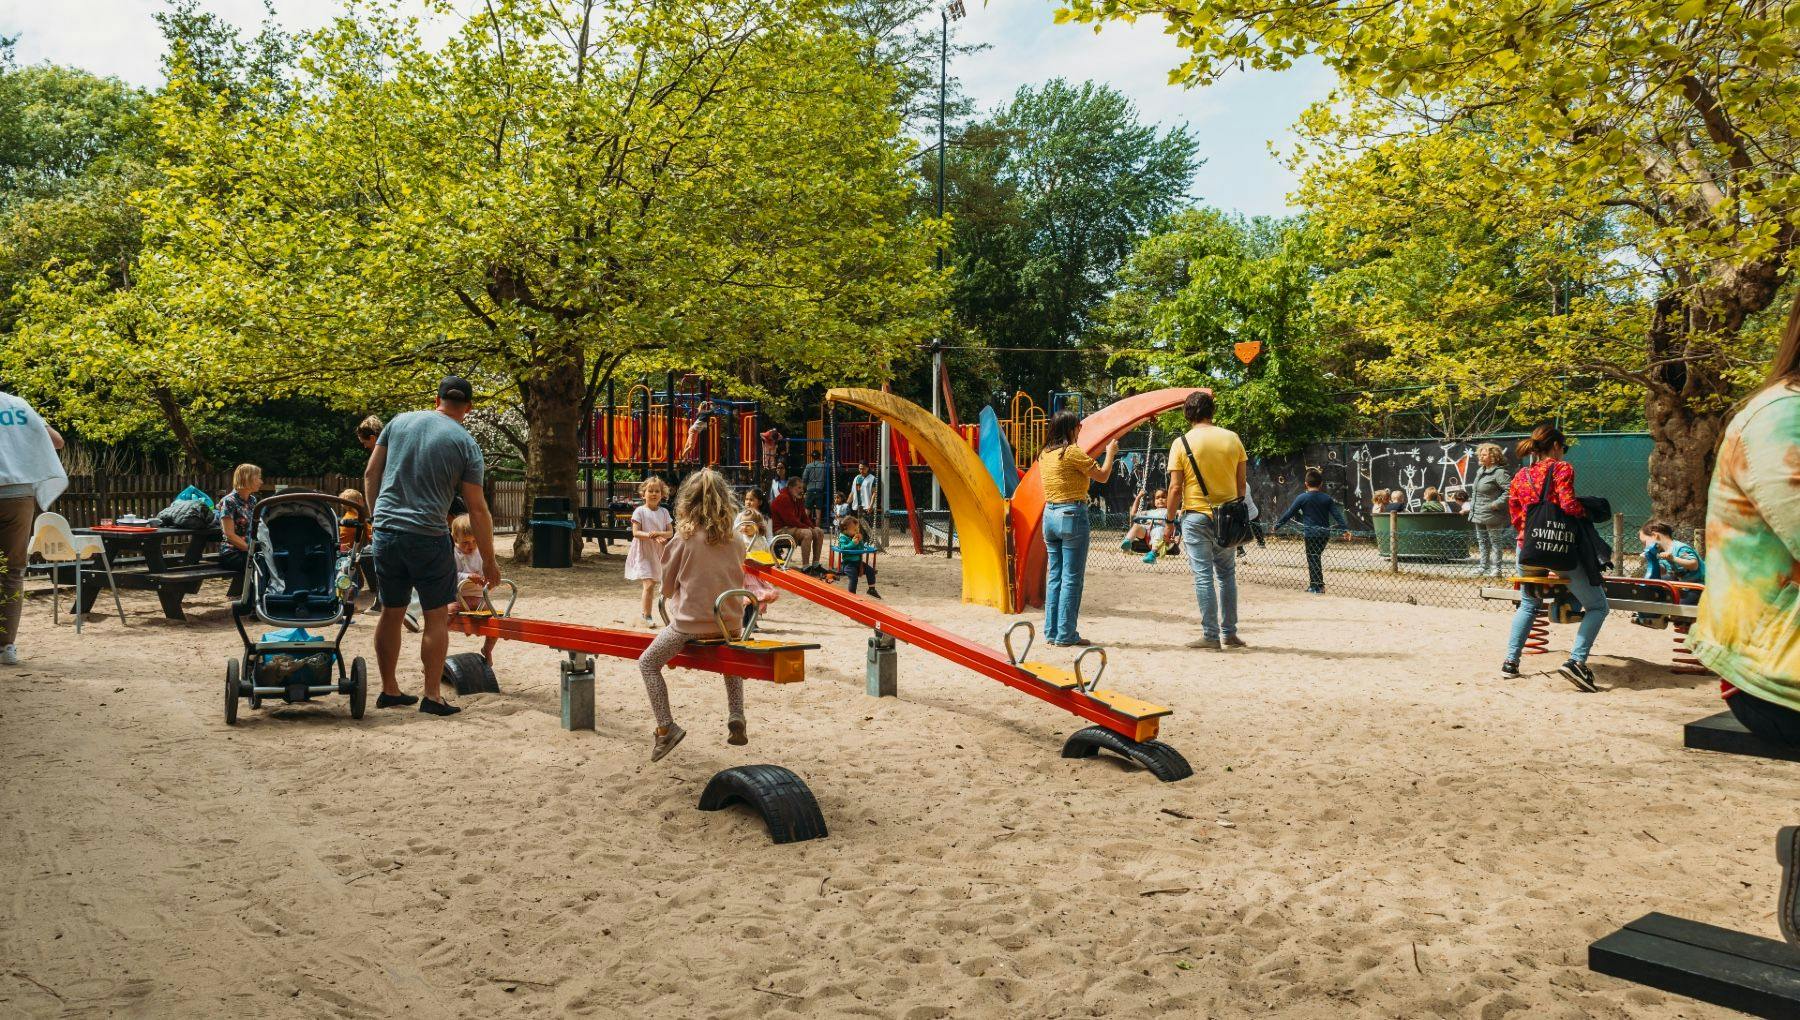 Groot Melkhuis café-restaurant playground for kids